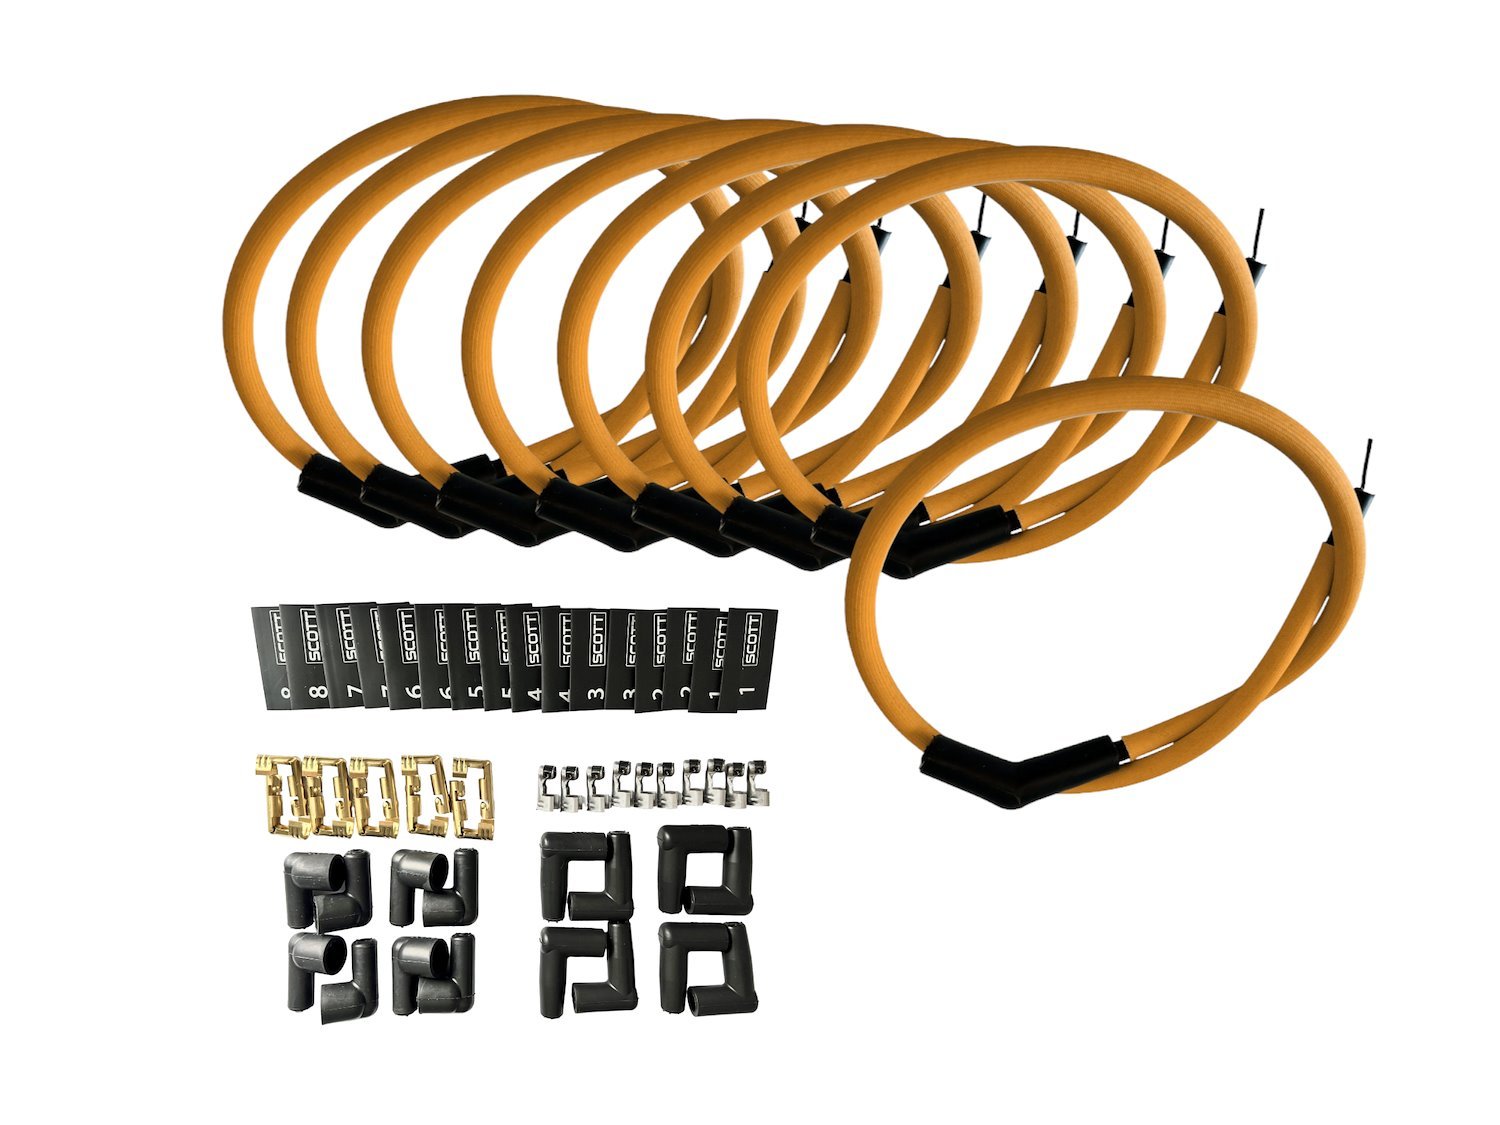 SPW-PS-K45-6 DIY High-Performance Fiberglass-Oversleeved Spark Plug Wire Set for DIY Kits, 45-Degree Boot [Orange]